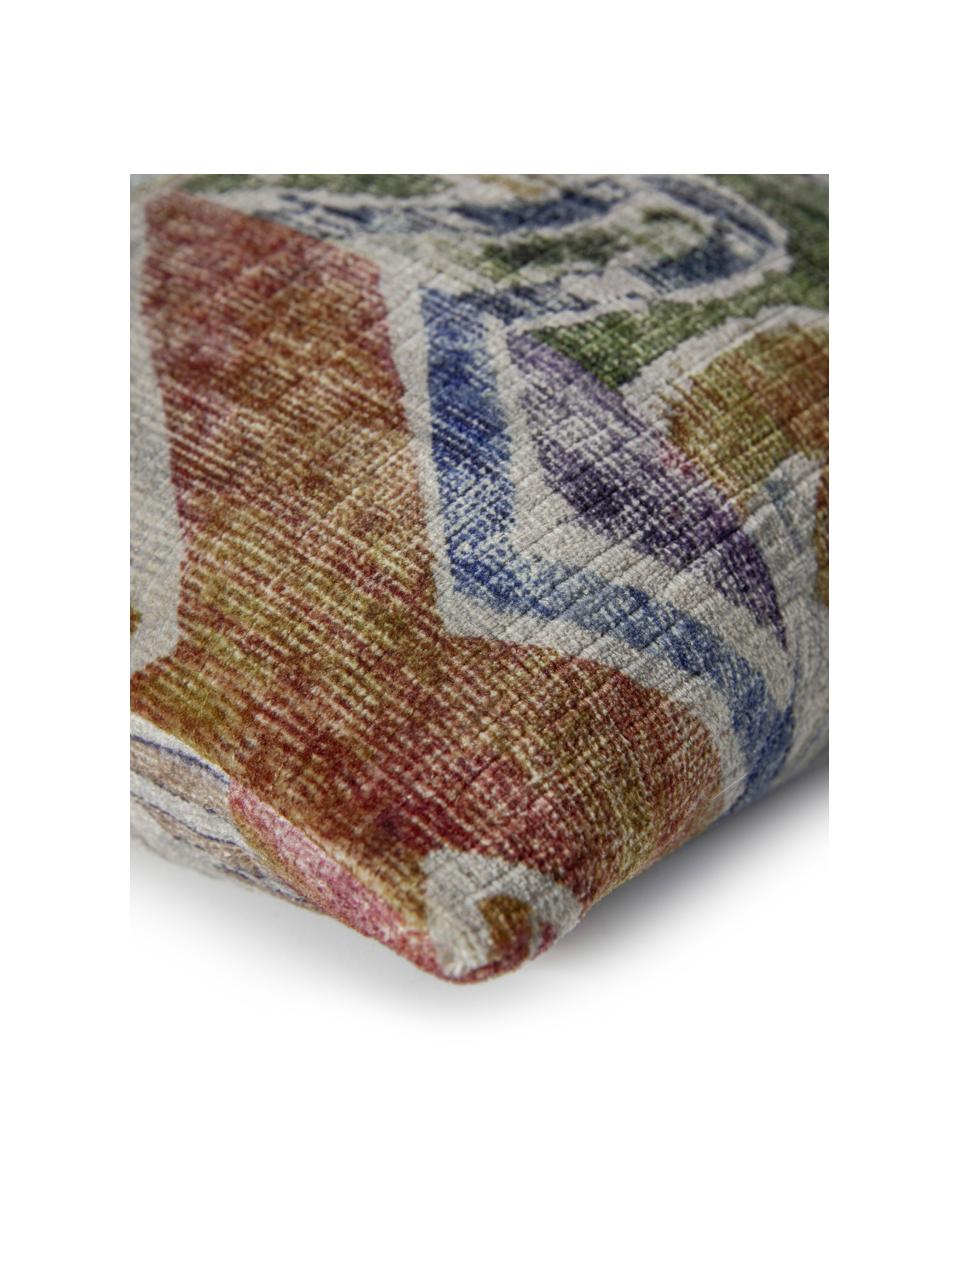 Fluwelen kussenhoes Cosima met gekleurd etno-patroon, 100% polyester fluweel, Wijnrood, multicolour, 40 x 40 cm